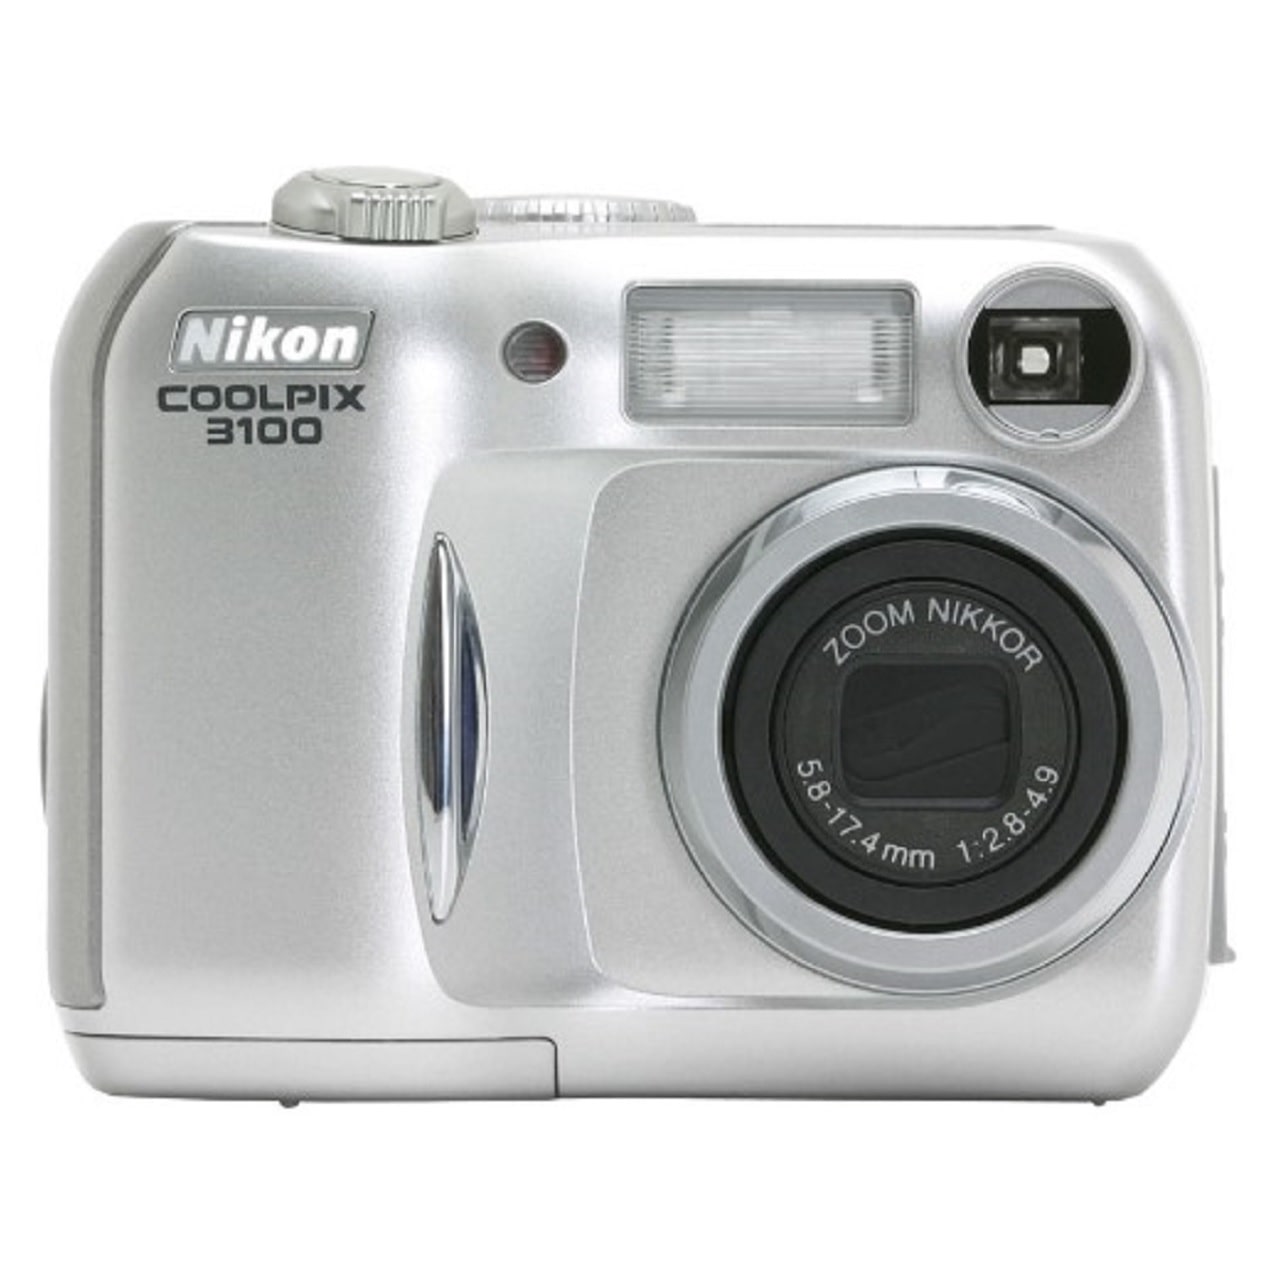 Alice Picasso Schrijf een brief Nikon Coolpix 3100 3MP Digital Camera with 3x Optical Zoom – TekRevolt